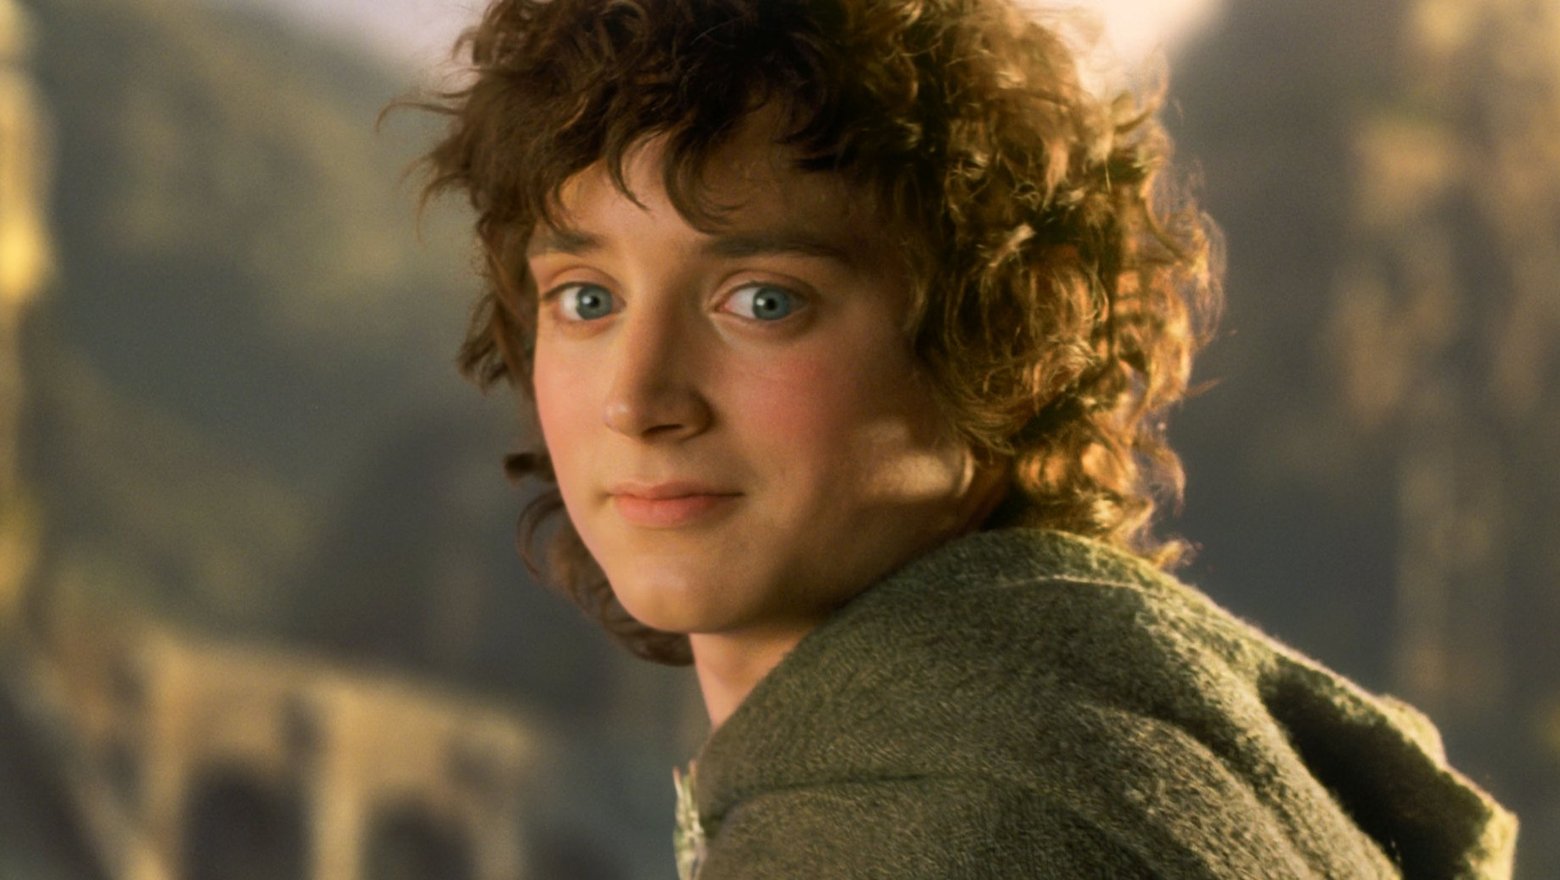 Властелин колец моменты. Элайджа Вуд Фродо. Фродо Бэггинс Властелин колец. Хоббит Фродо. Хоббит Фродо Бэггинс.